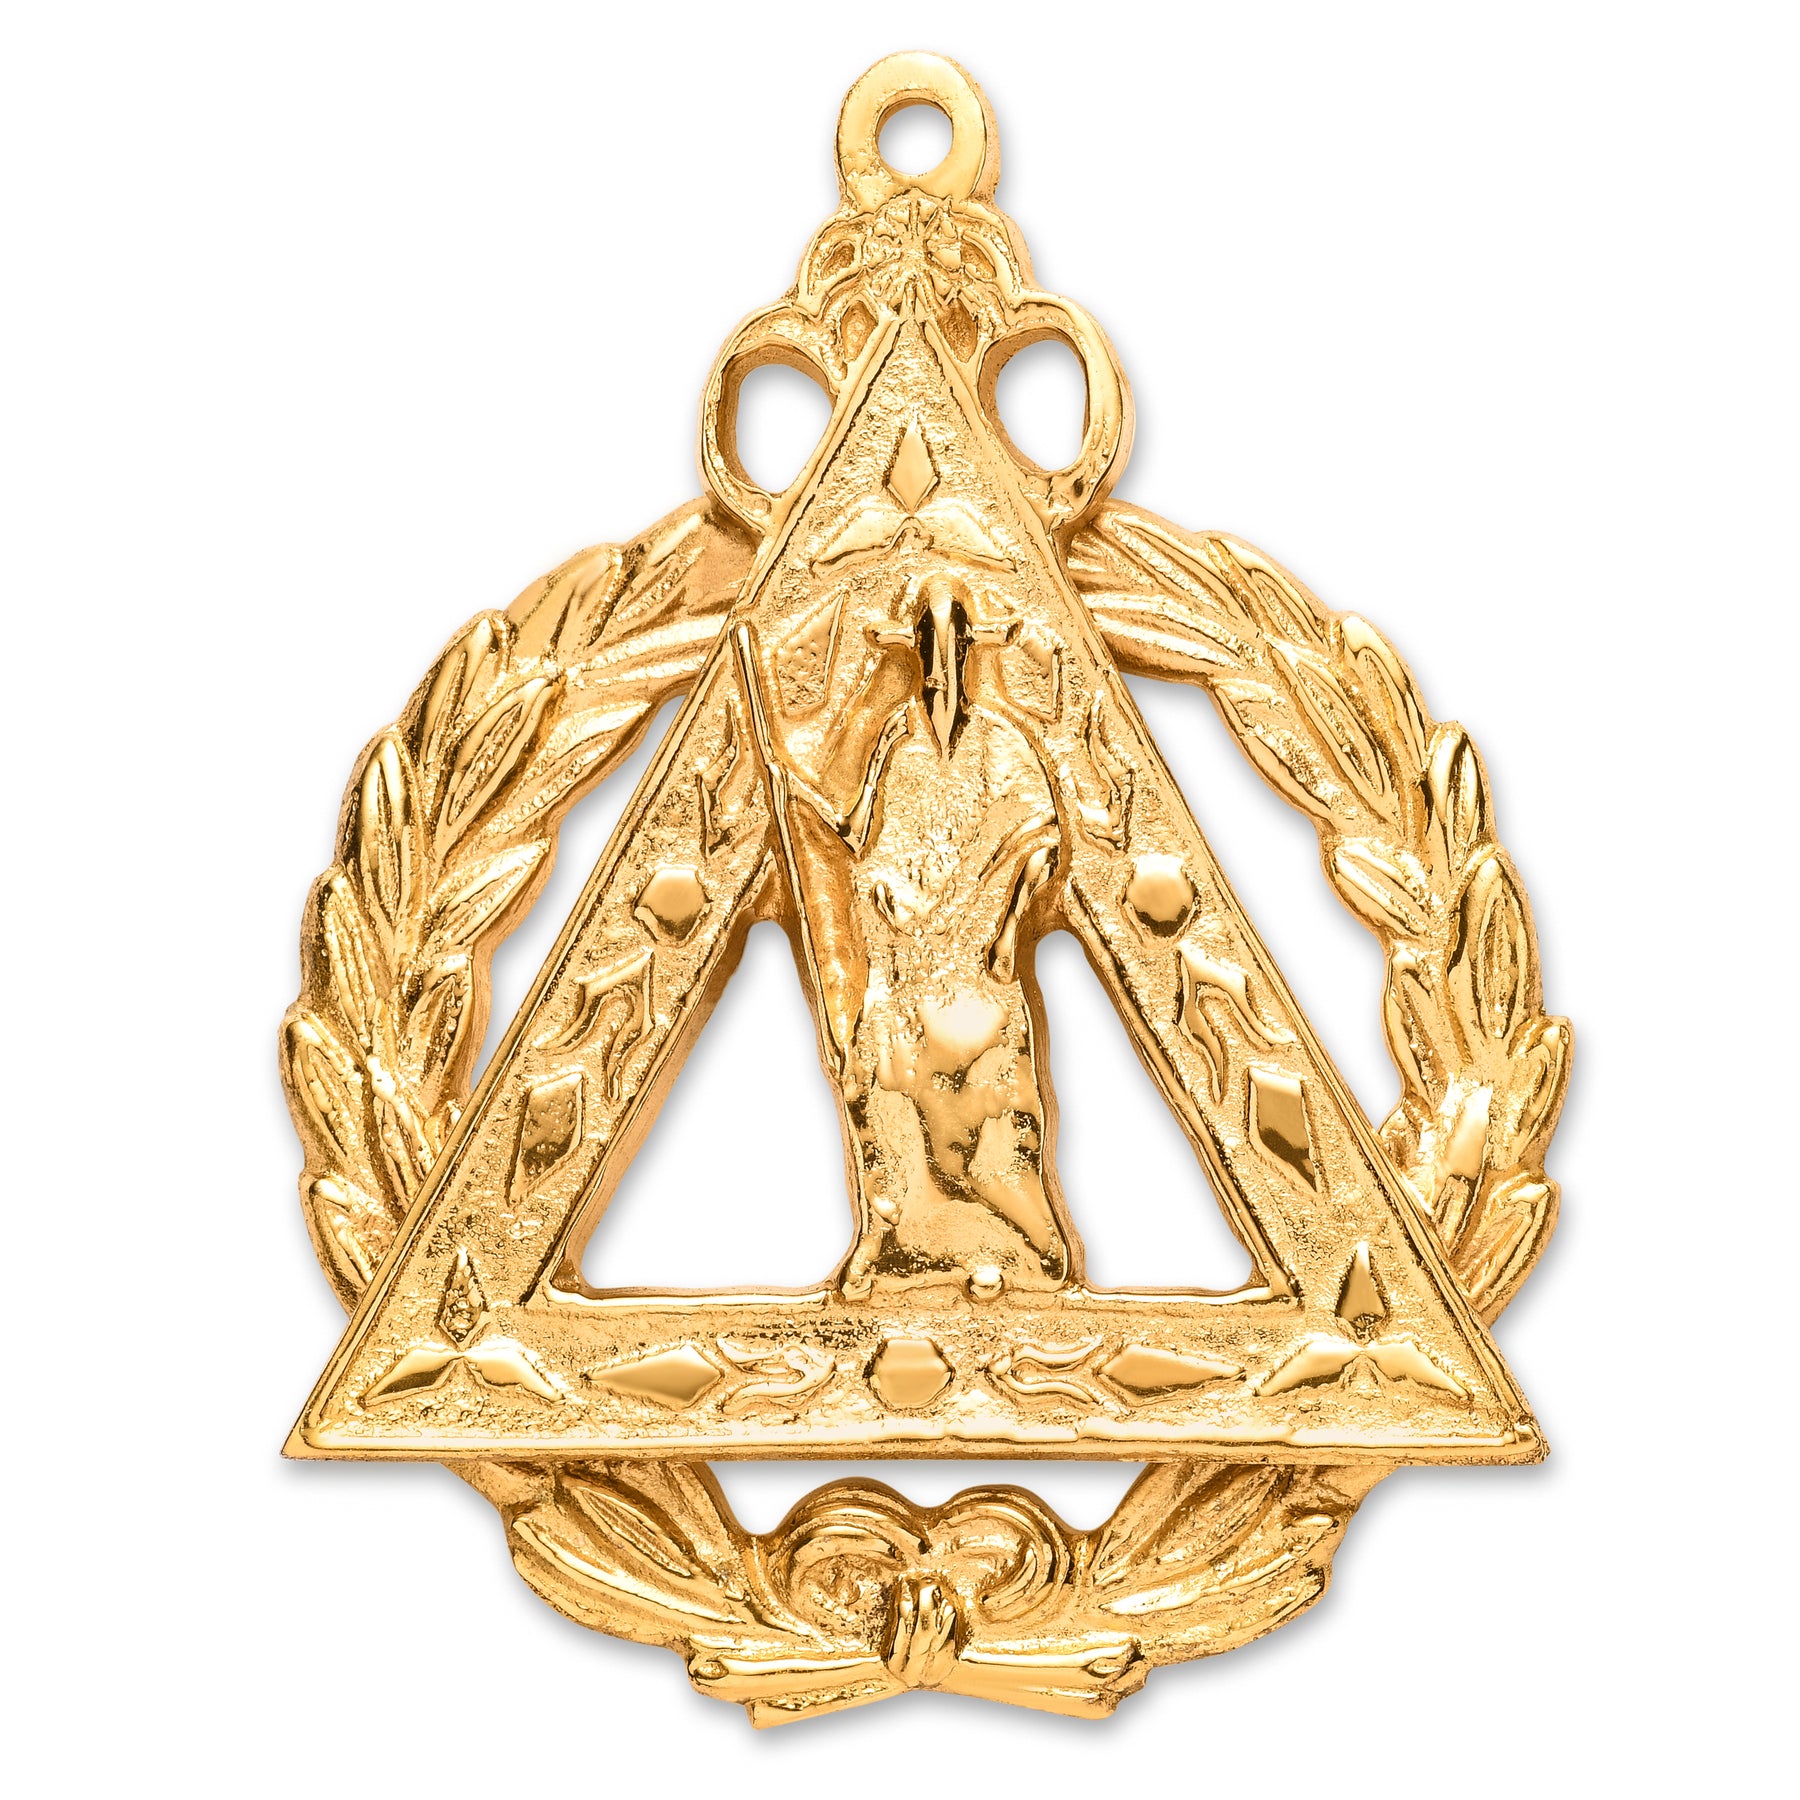 Grand Principal Sojourner Royal Arch Chapter Officer Collar Jewel - Gold Plated - Bricks Masons